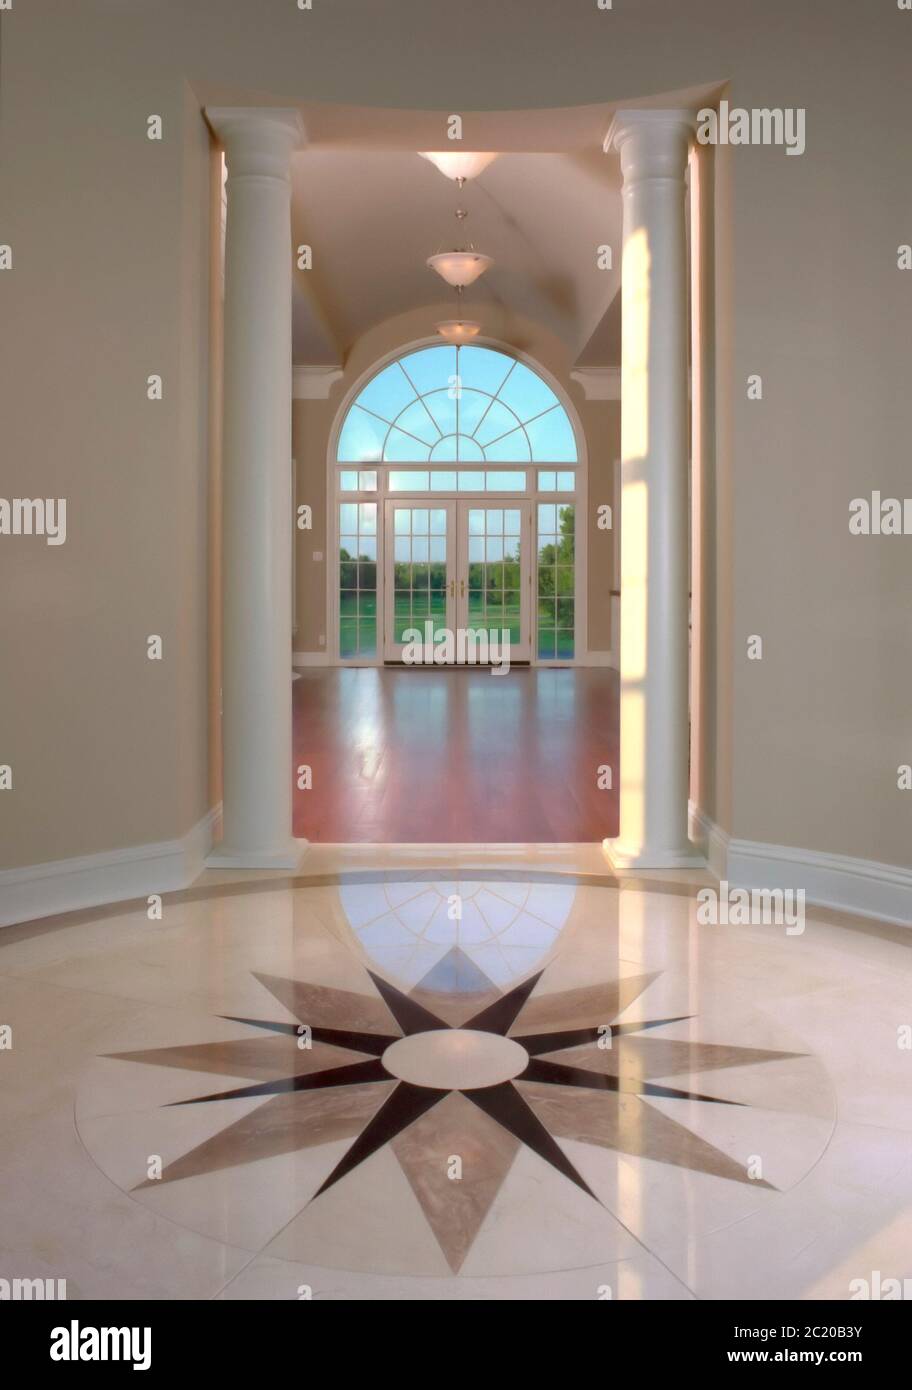 Bel pavimento in pietra in un atrio d'ingresso Foto Stock